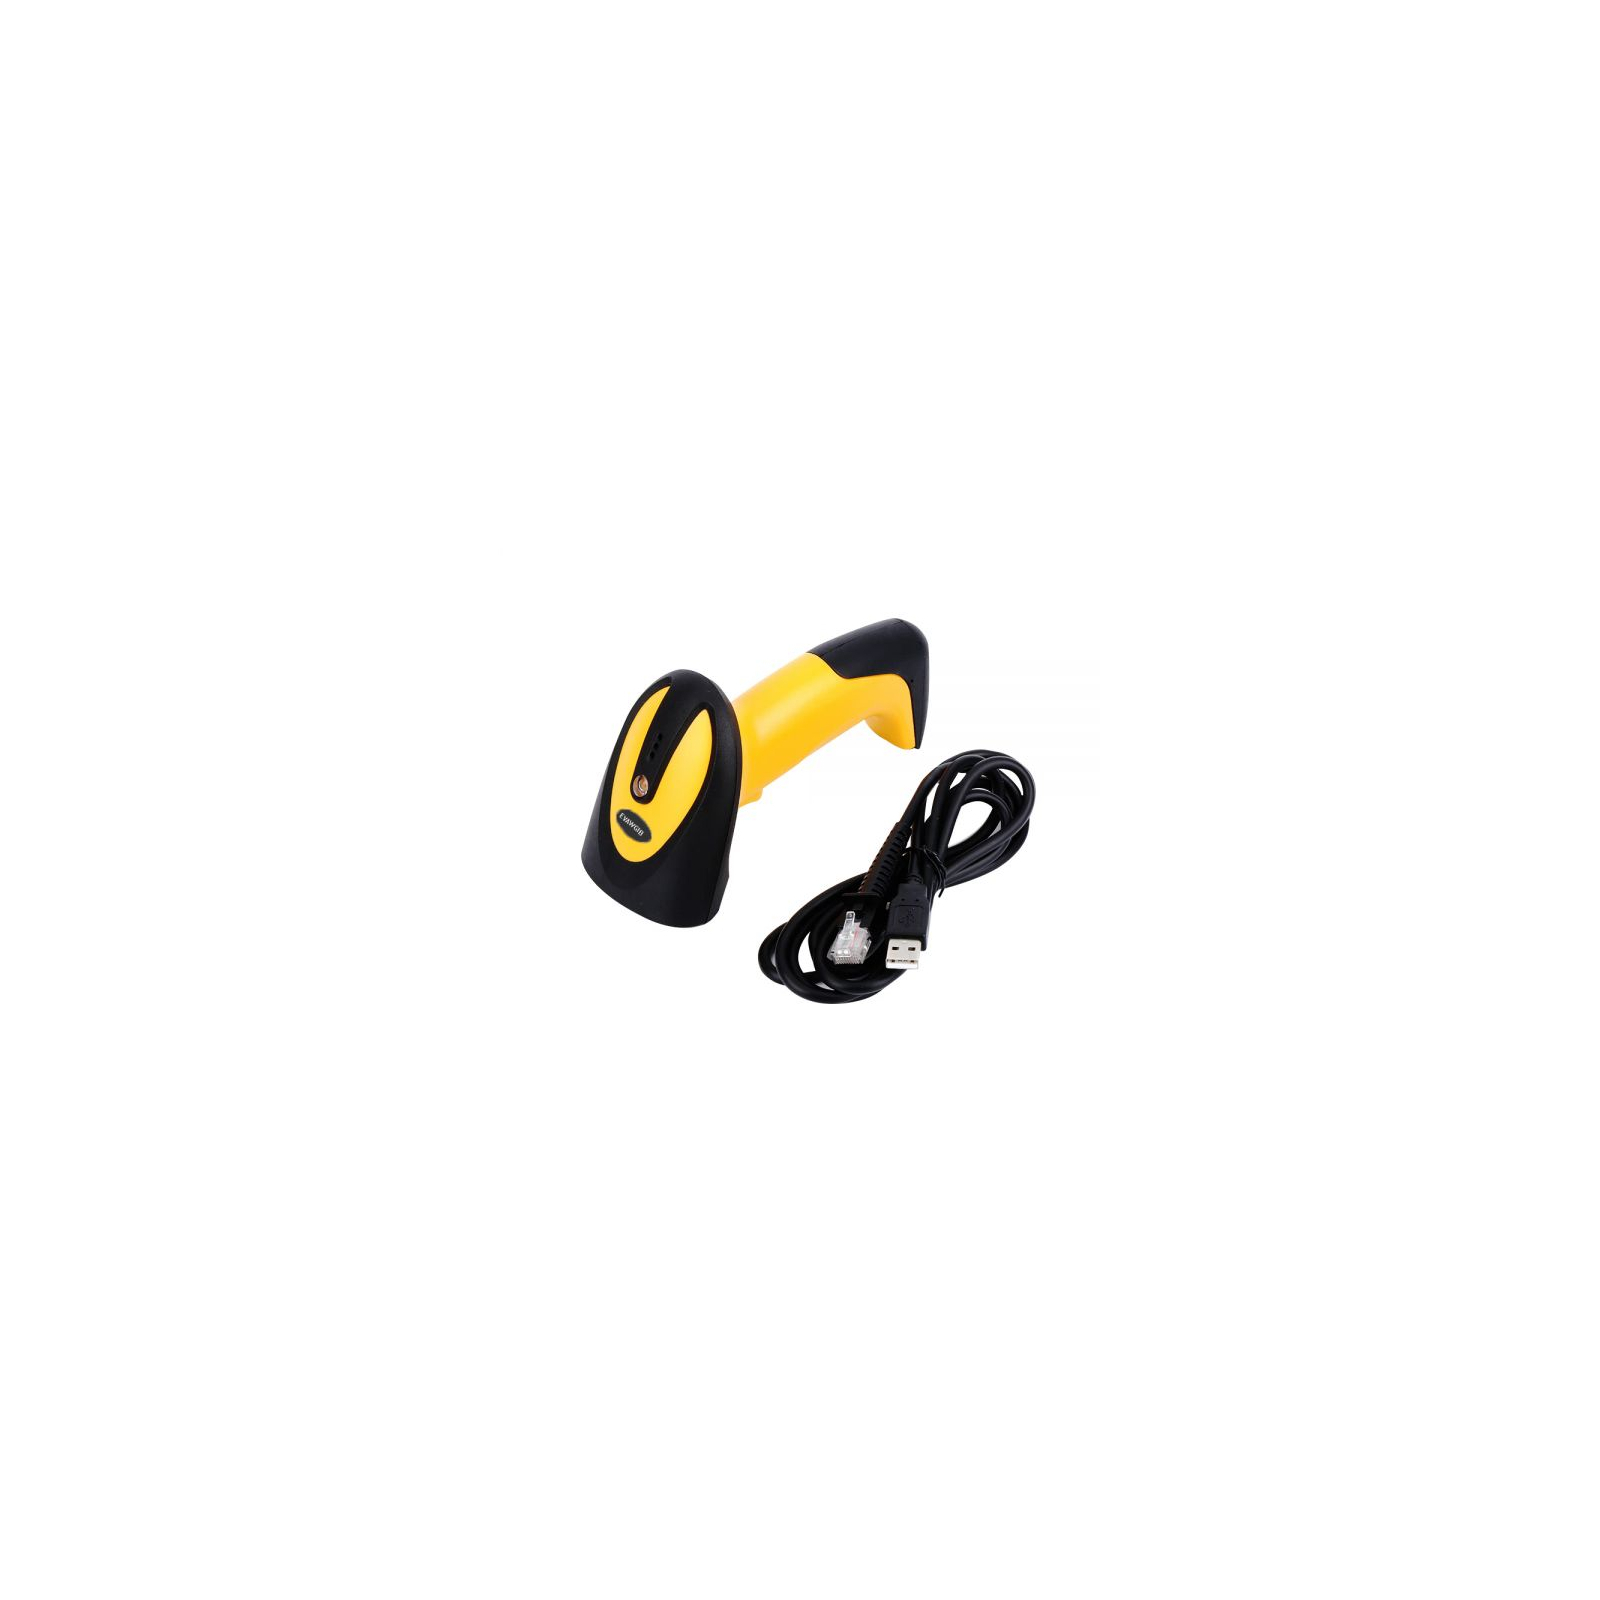 Сканер штрих-кода UKRMARK EV-W2503 2D, 433MHz, USB, IP64, stand, black/yellow (00769) изображение 6